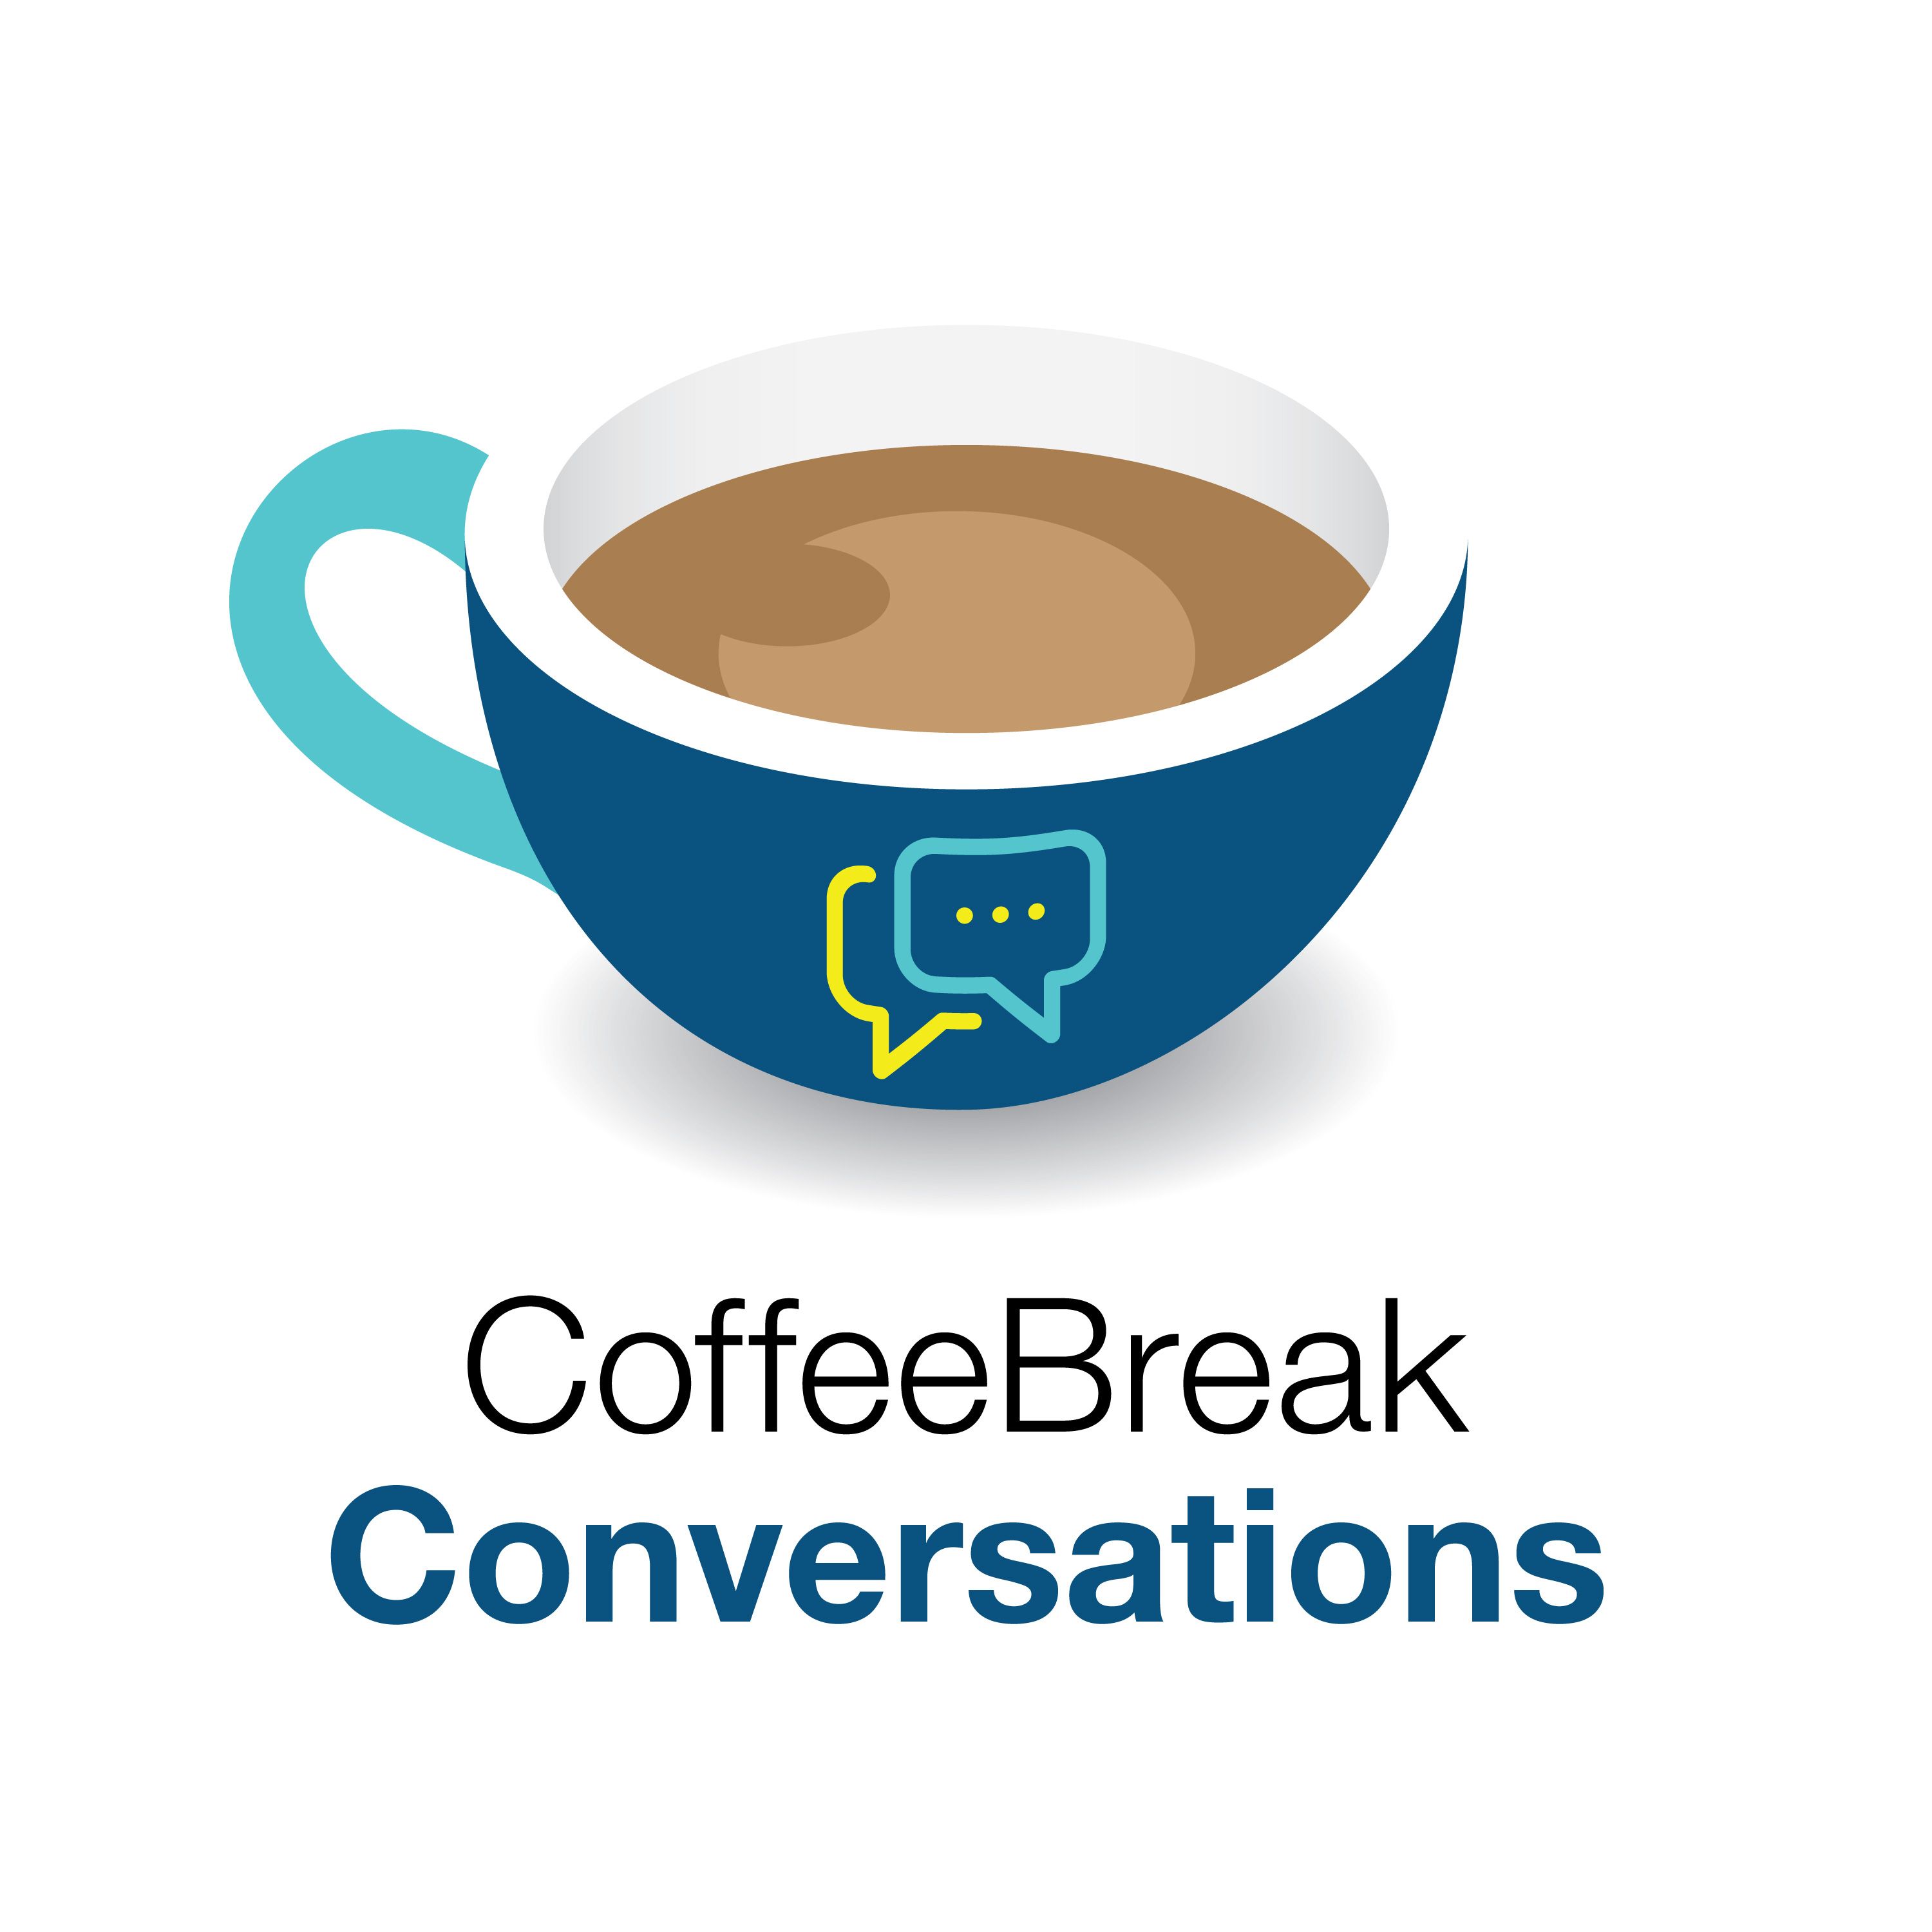 A Coffee Break Conversation with polyglot Kris Broholm